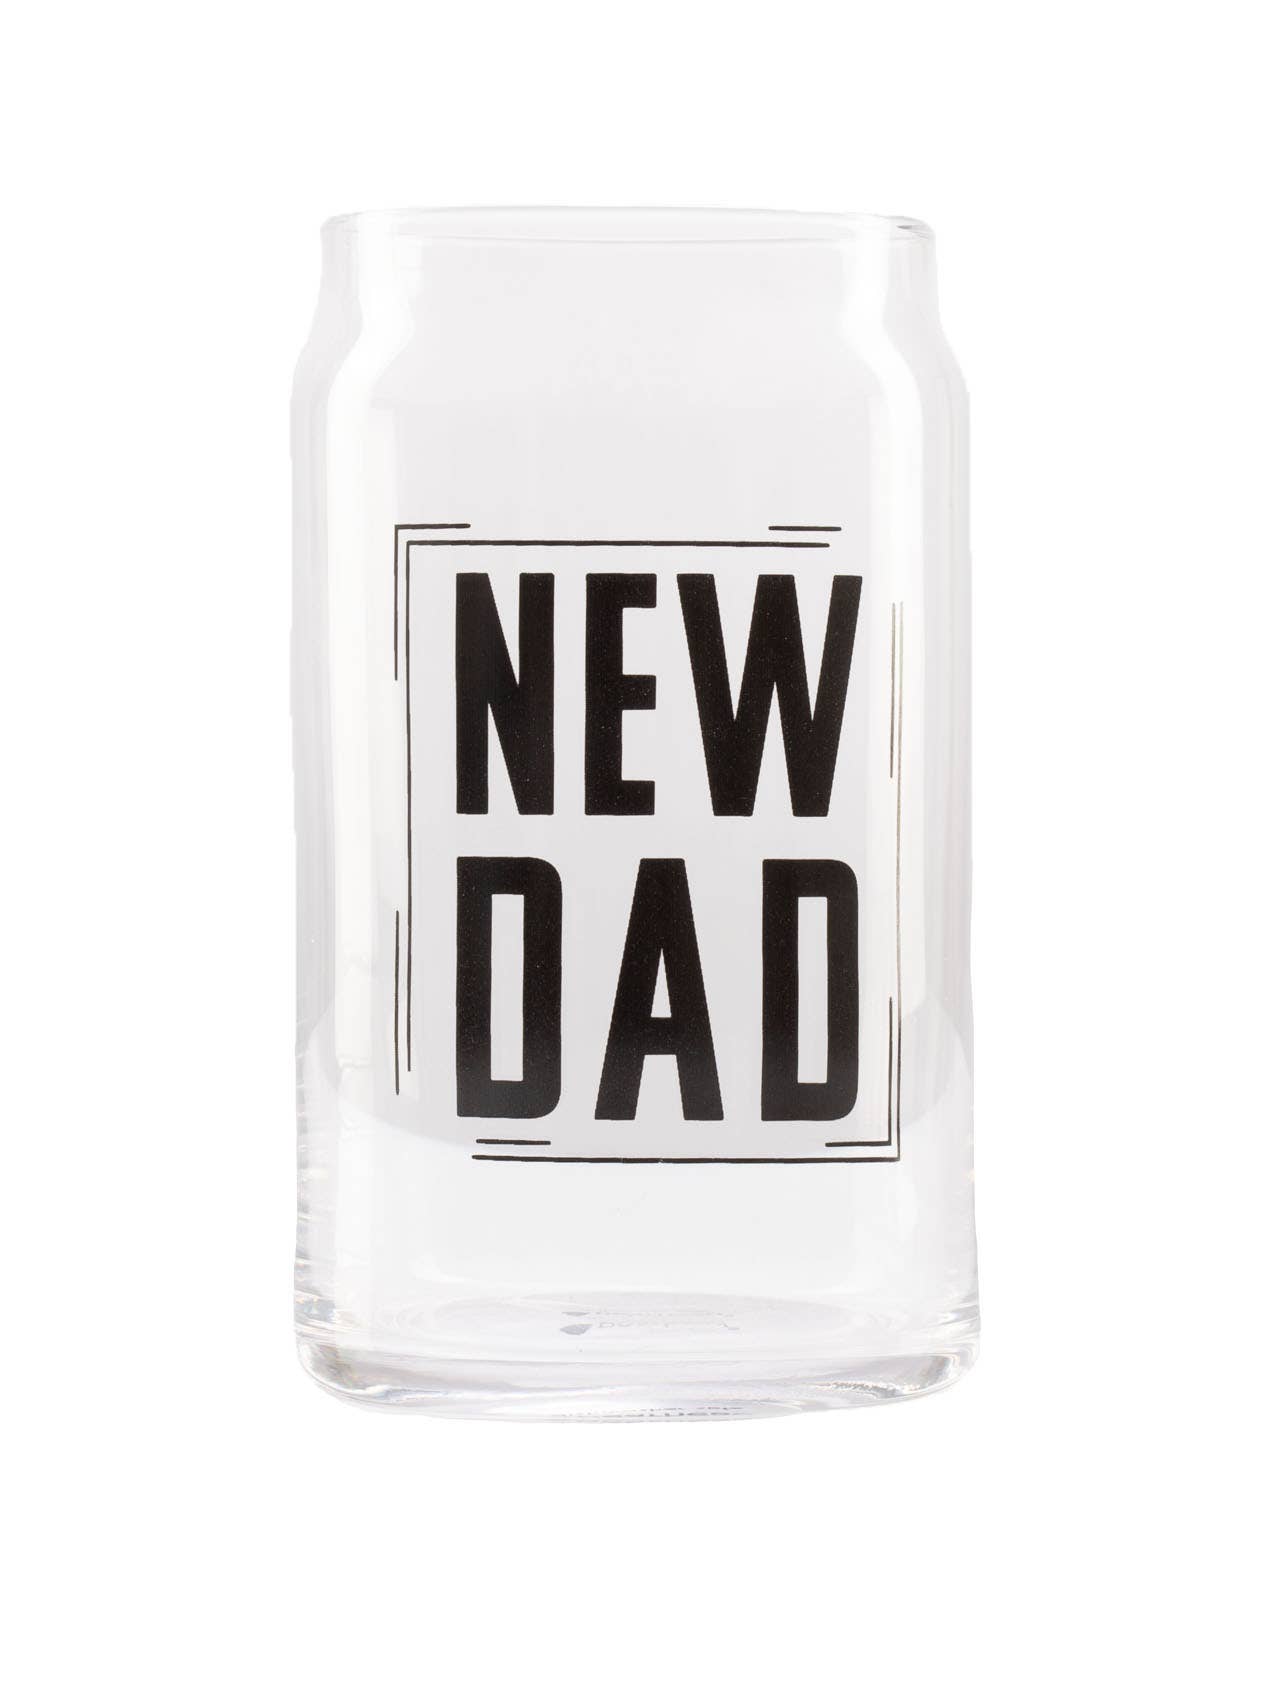 Pearhead dad beer glass